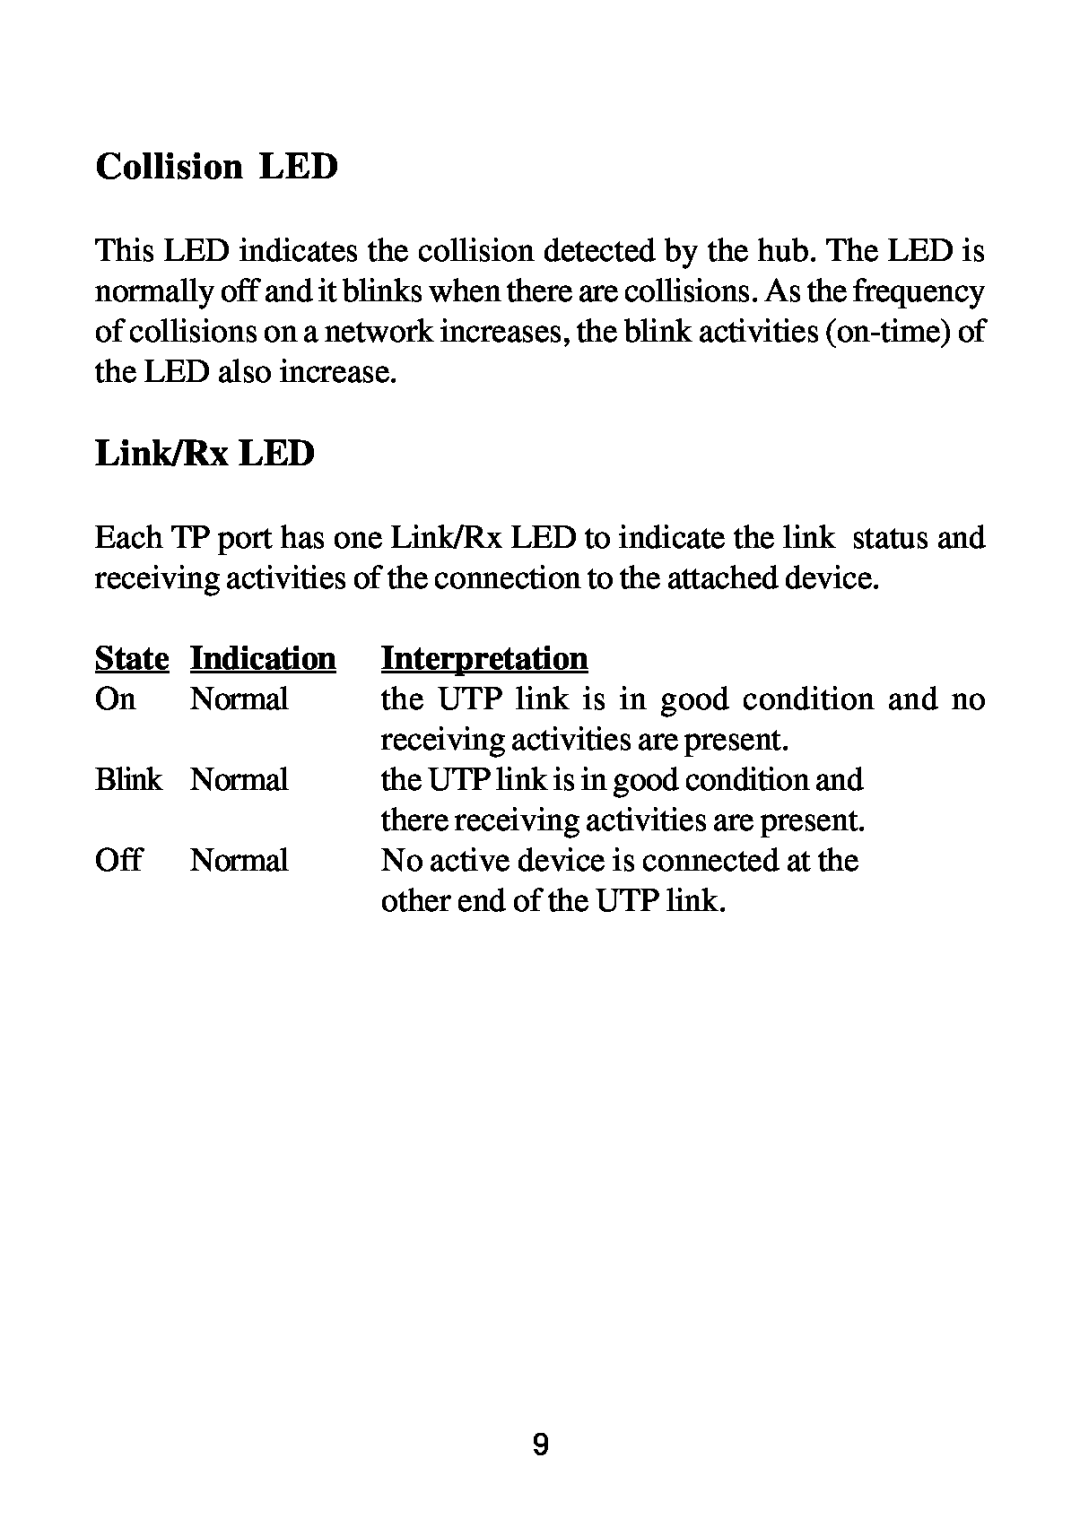 KTI Networks DH-8T manual Collision LED, Link/Rx LED, State, Indication, Interpretation 